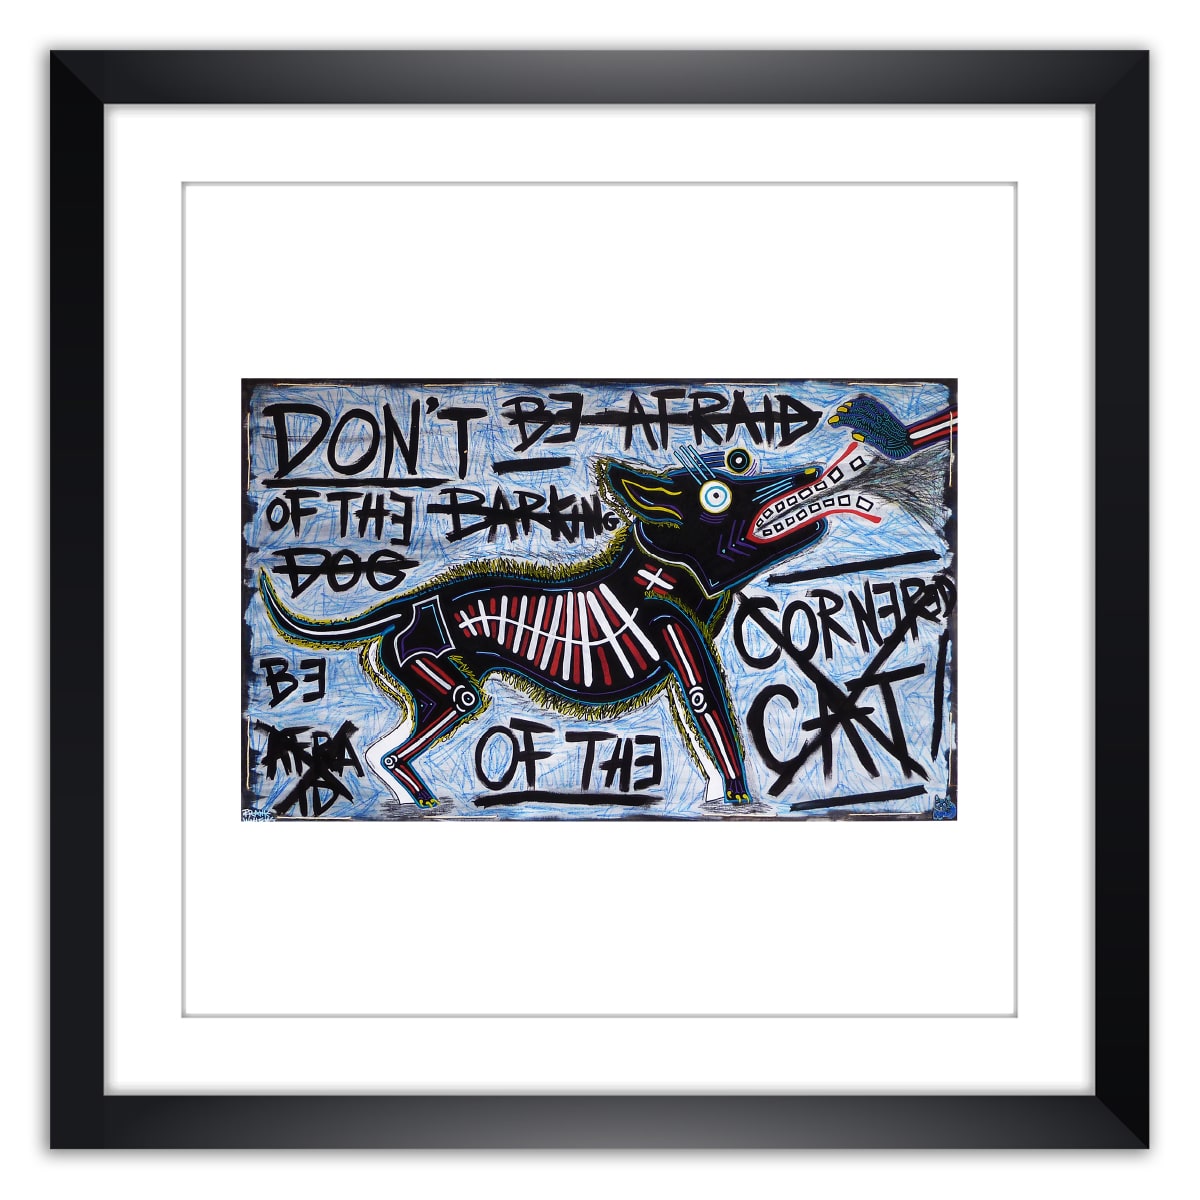 Limited prints - DON'T BE AFRAID OF THE BARKING DOG, BE AFRAID OF THE CORNERED CAT framed - Frank Willems